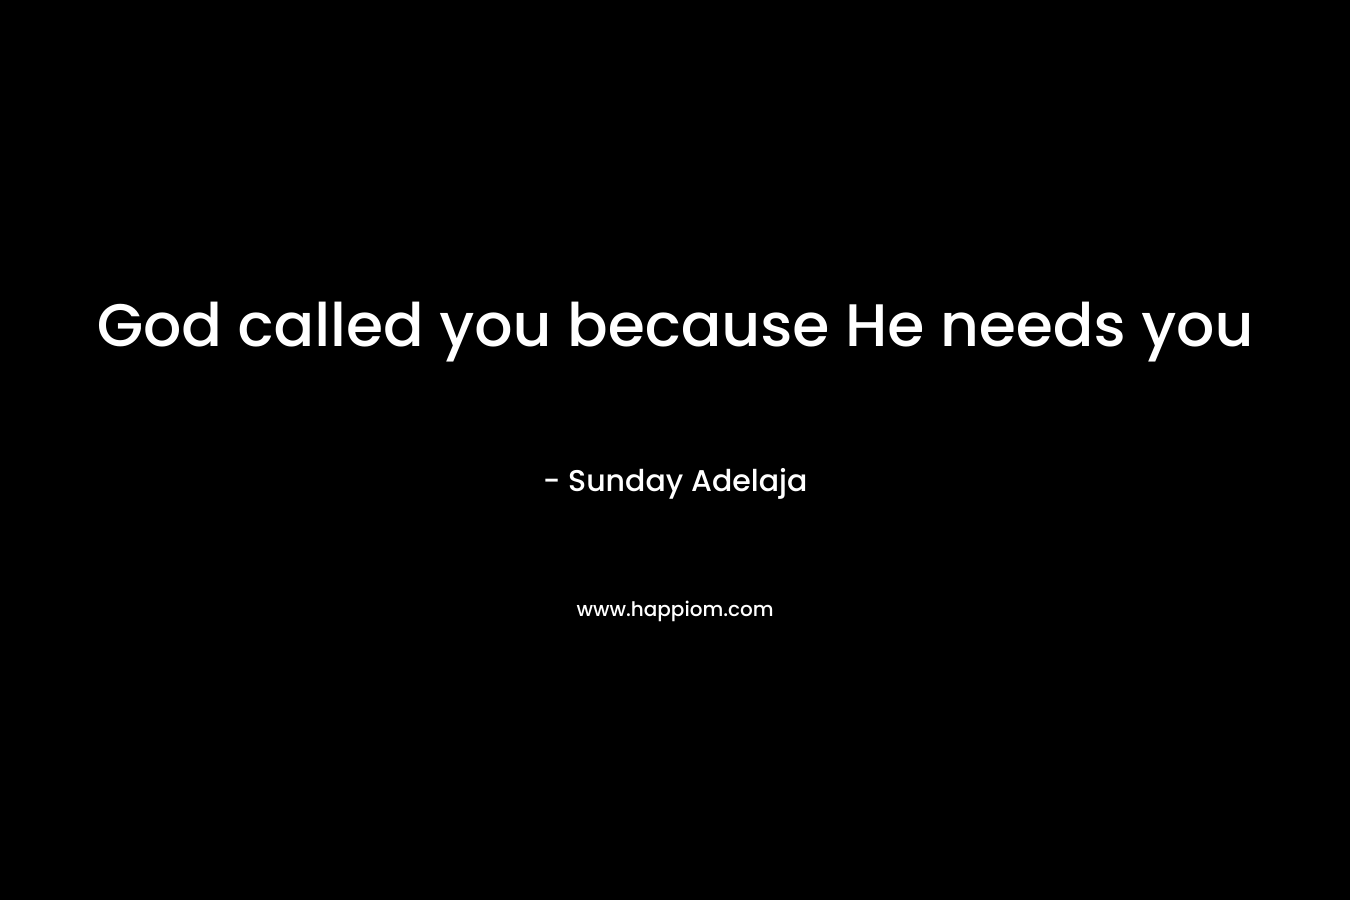 God called you because He needs you